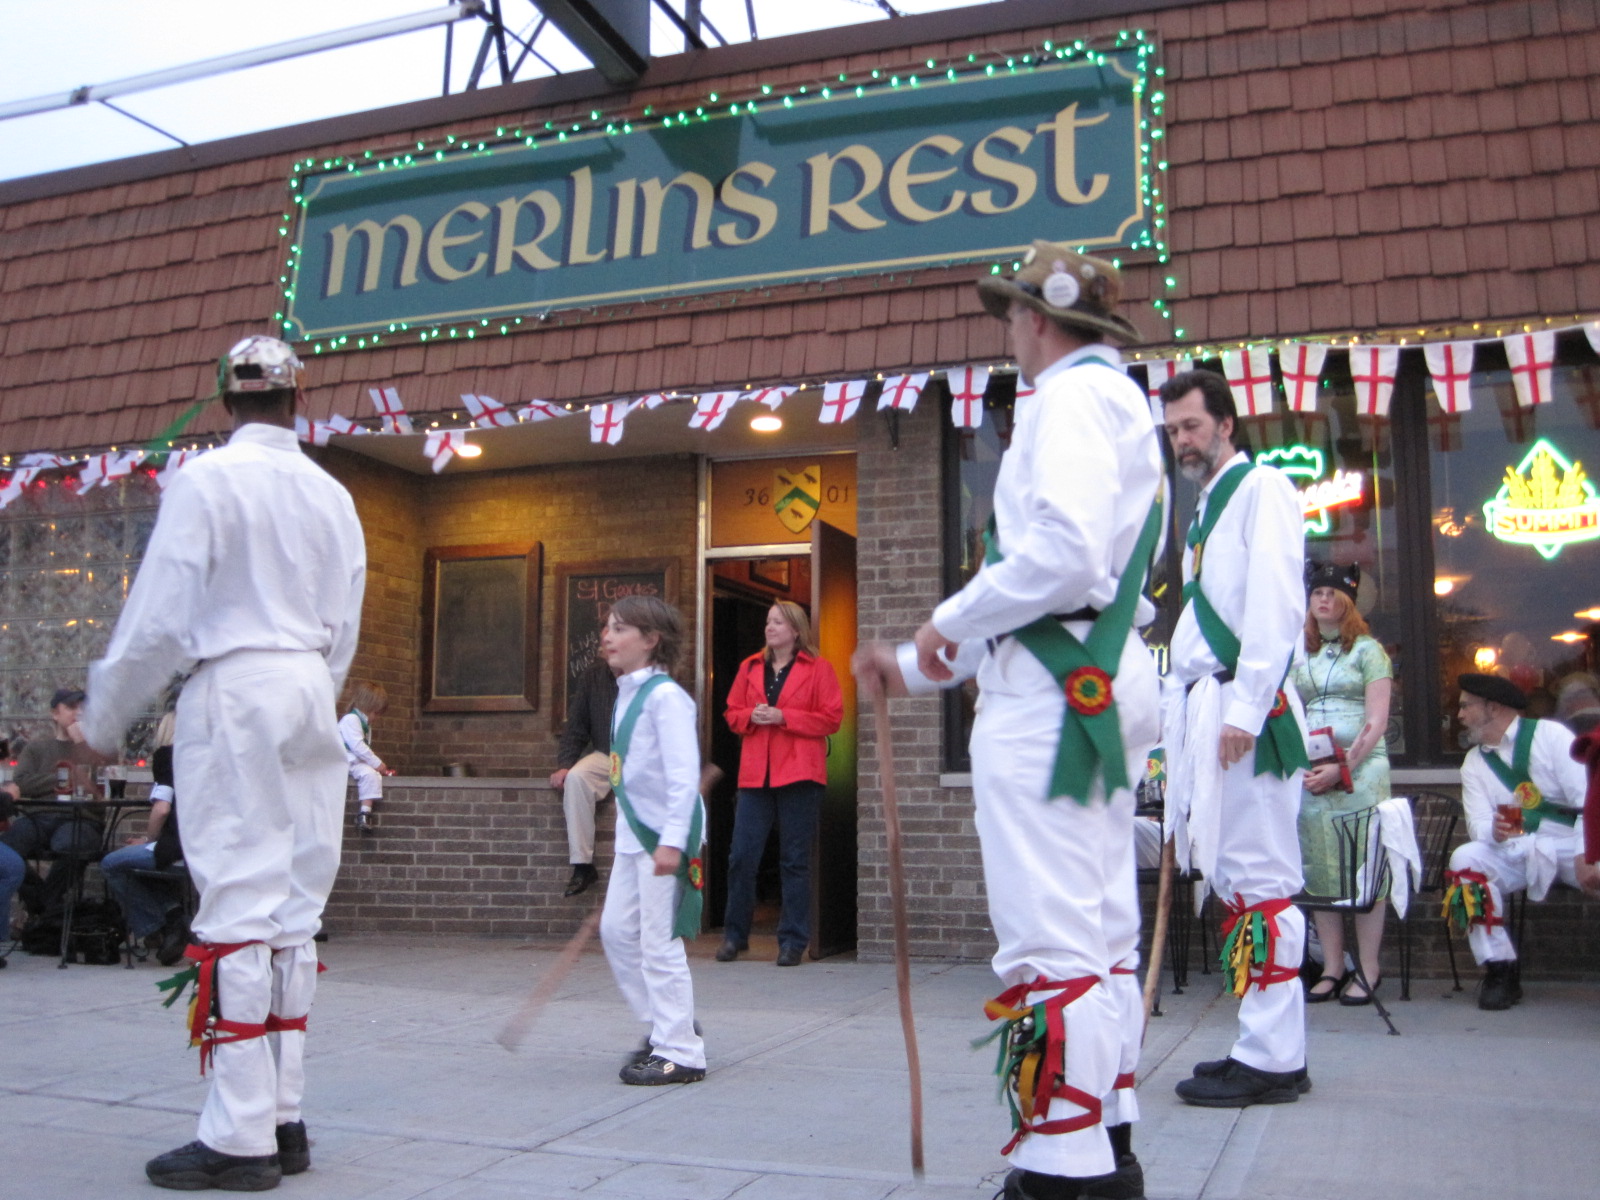 Merlins Rest Pub